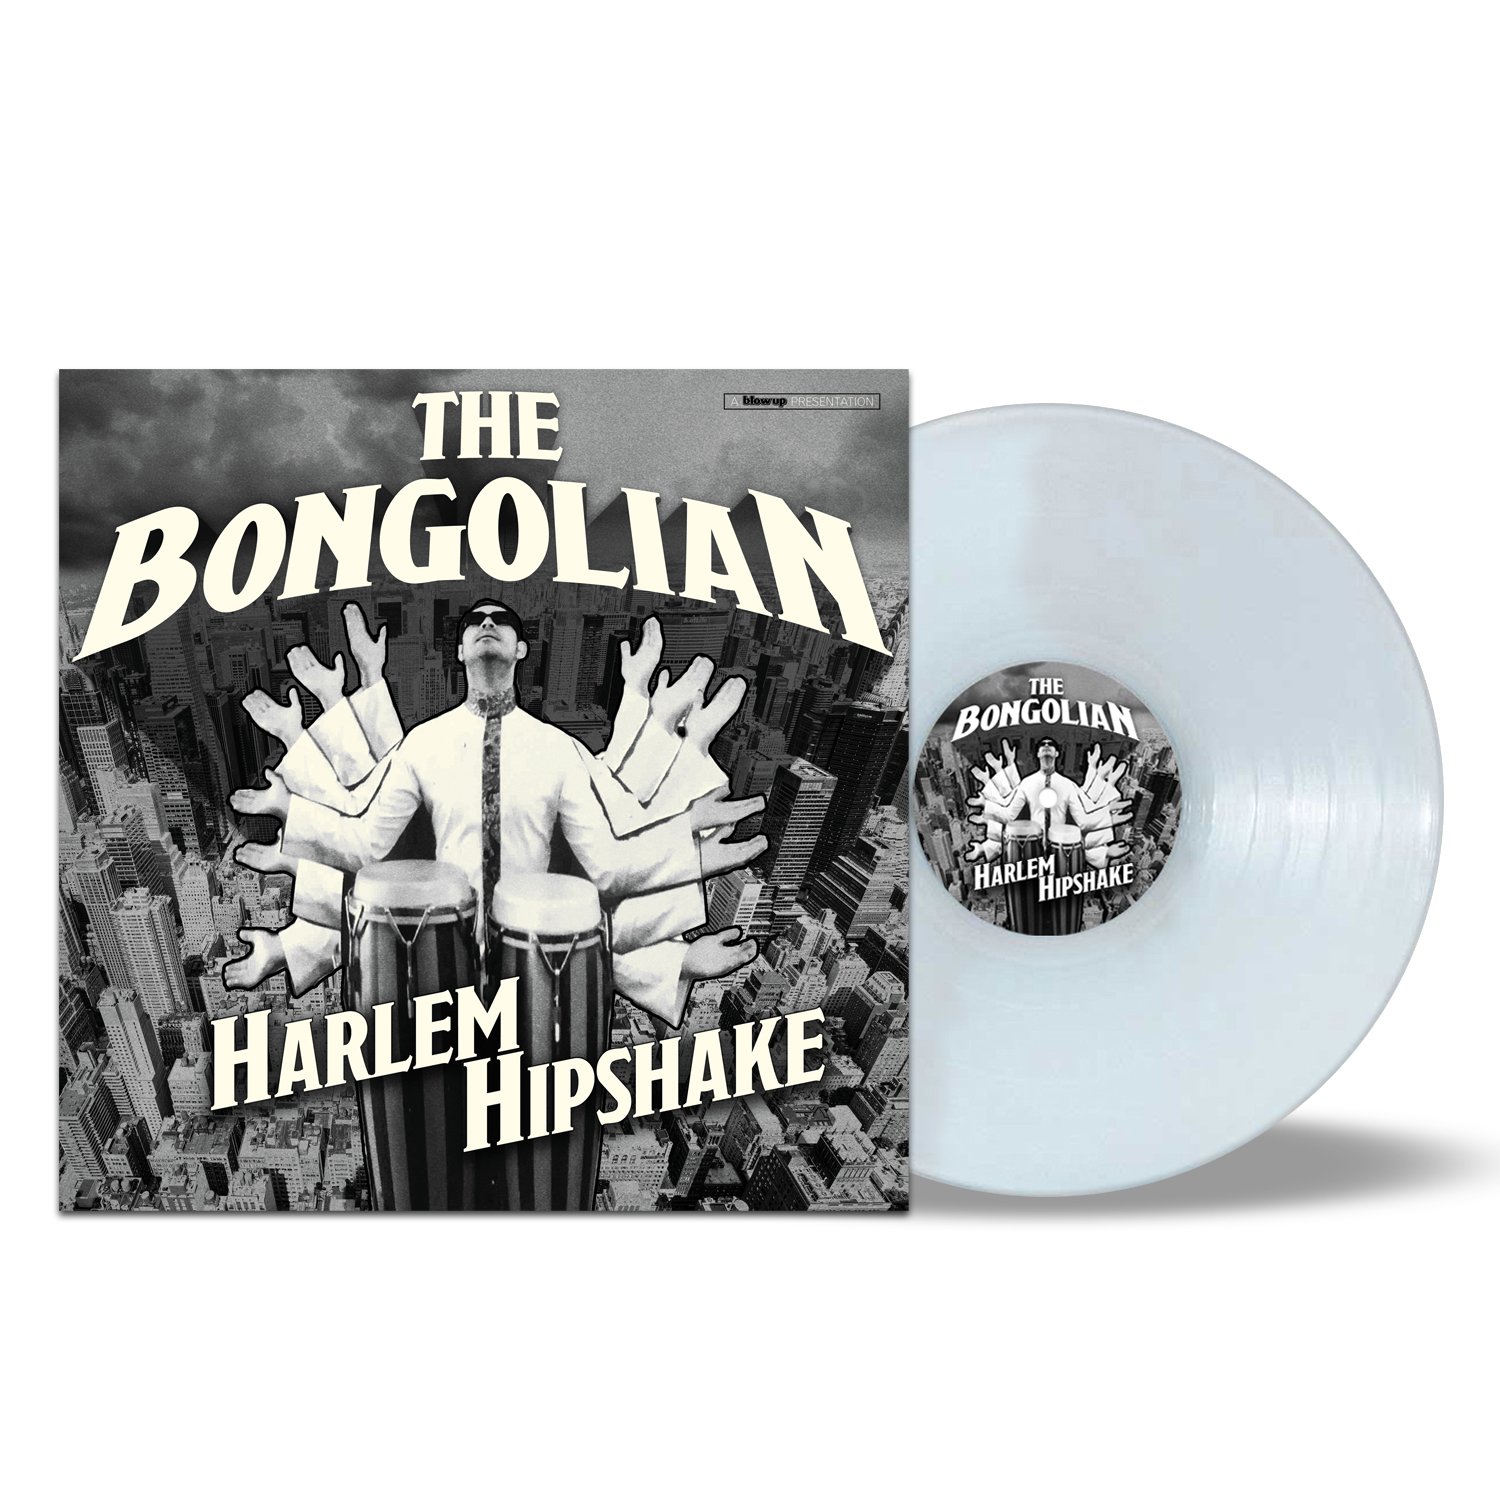 The Bongolian "Harlem Hipshake" LP